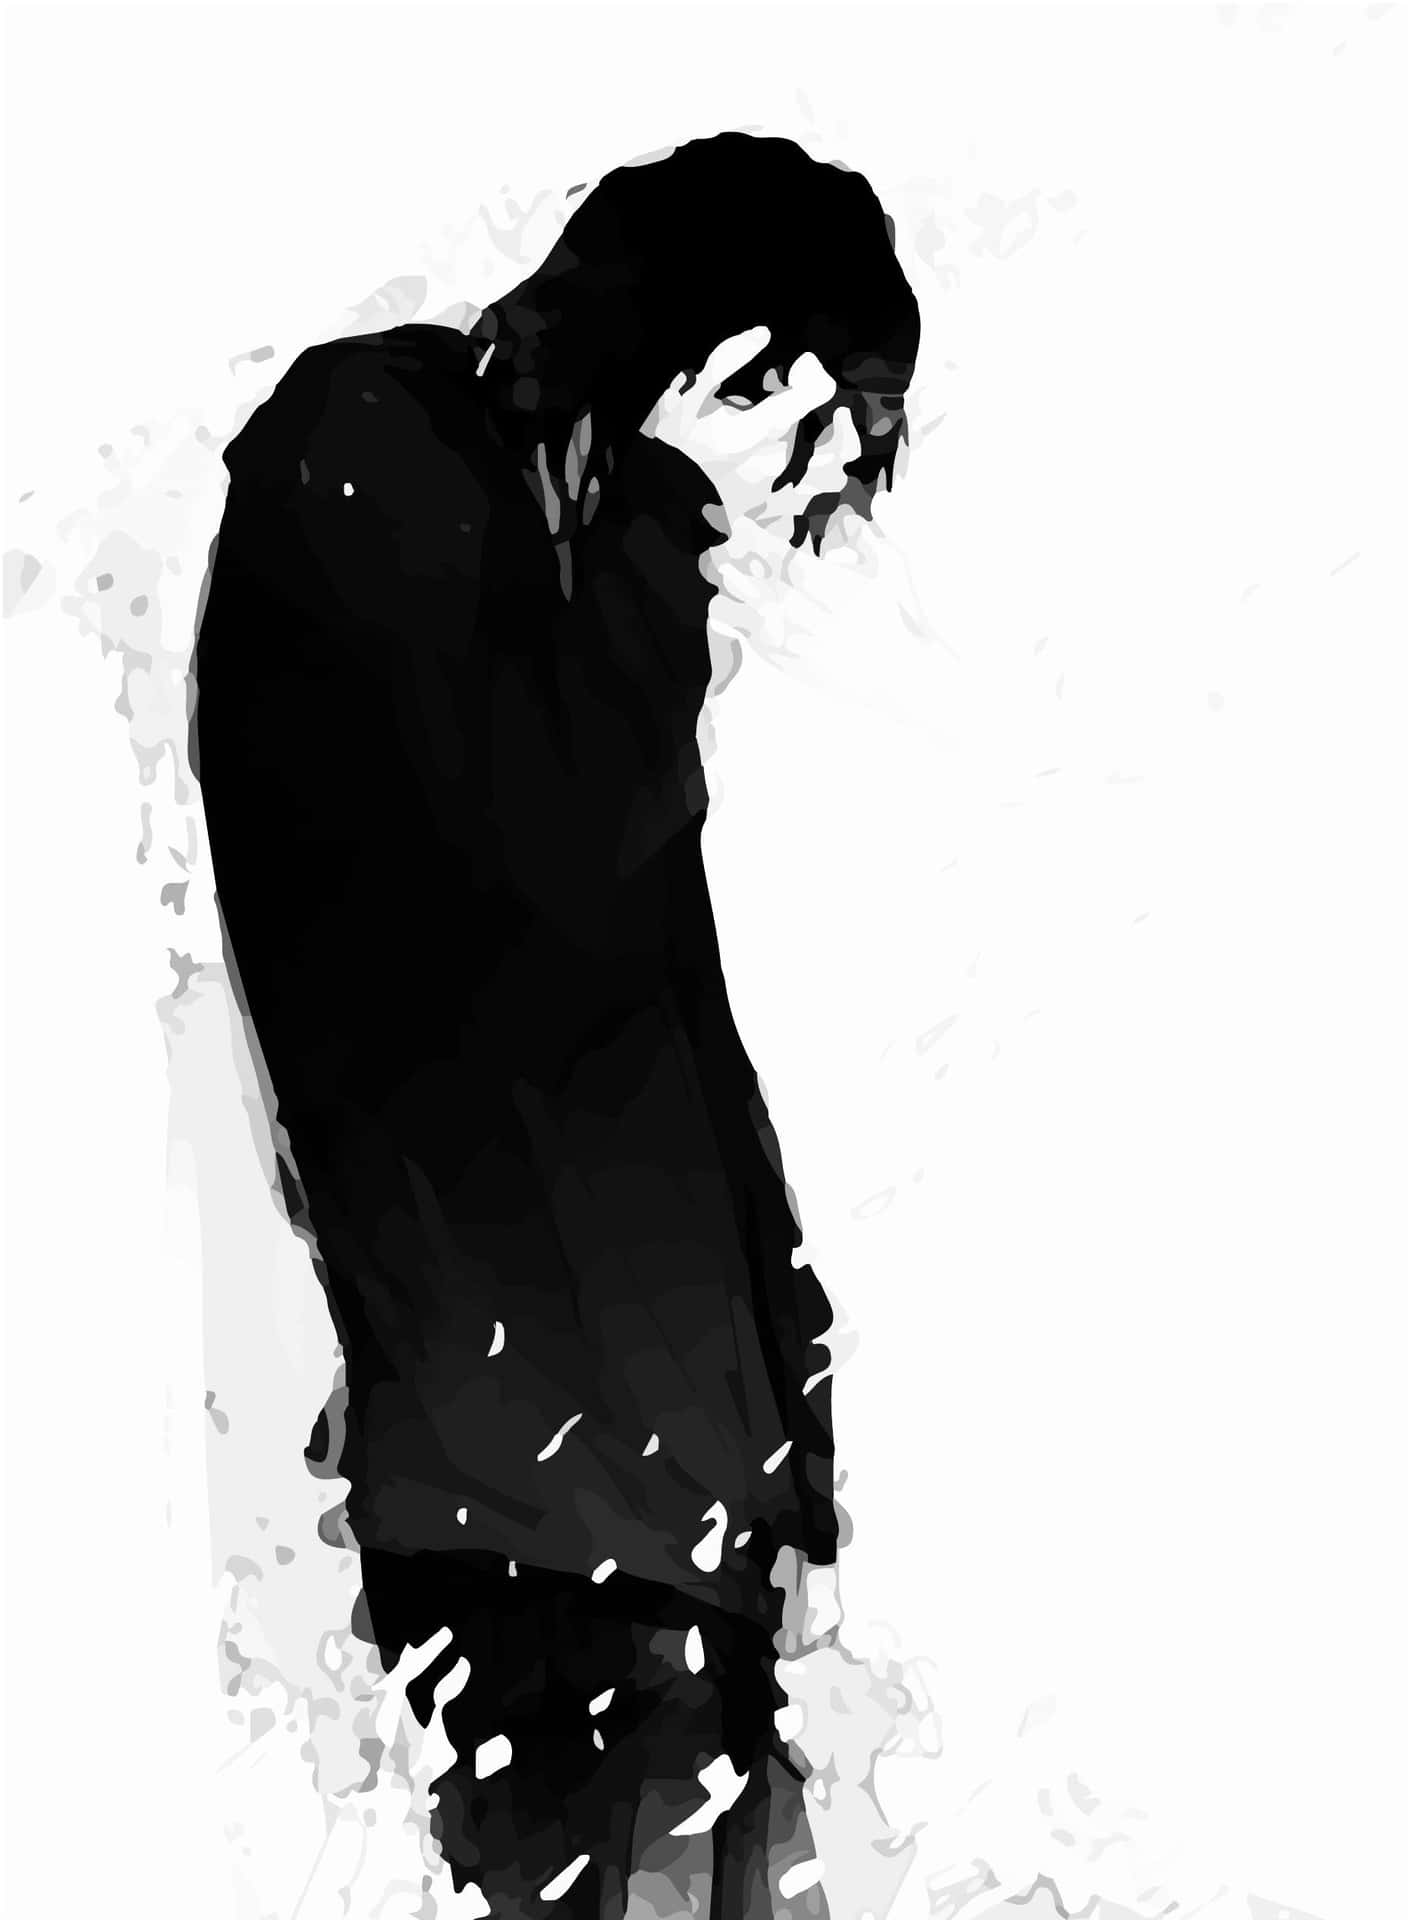 Sad Depressing Anime Boy Crying Alone Digital Art